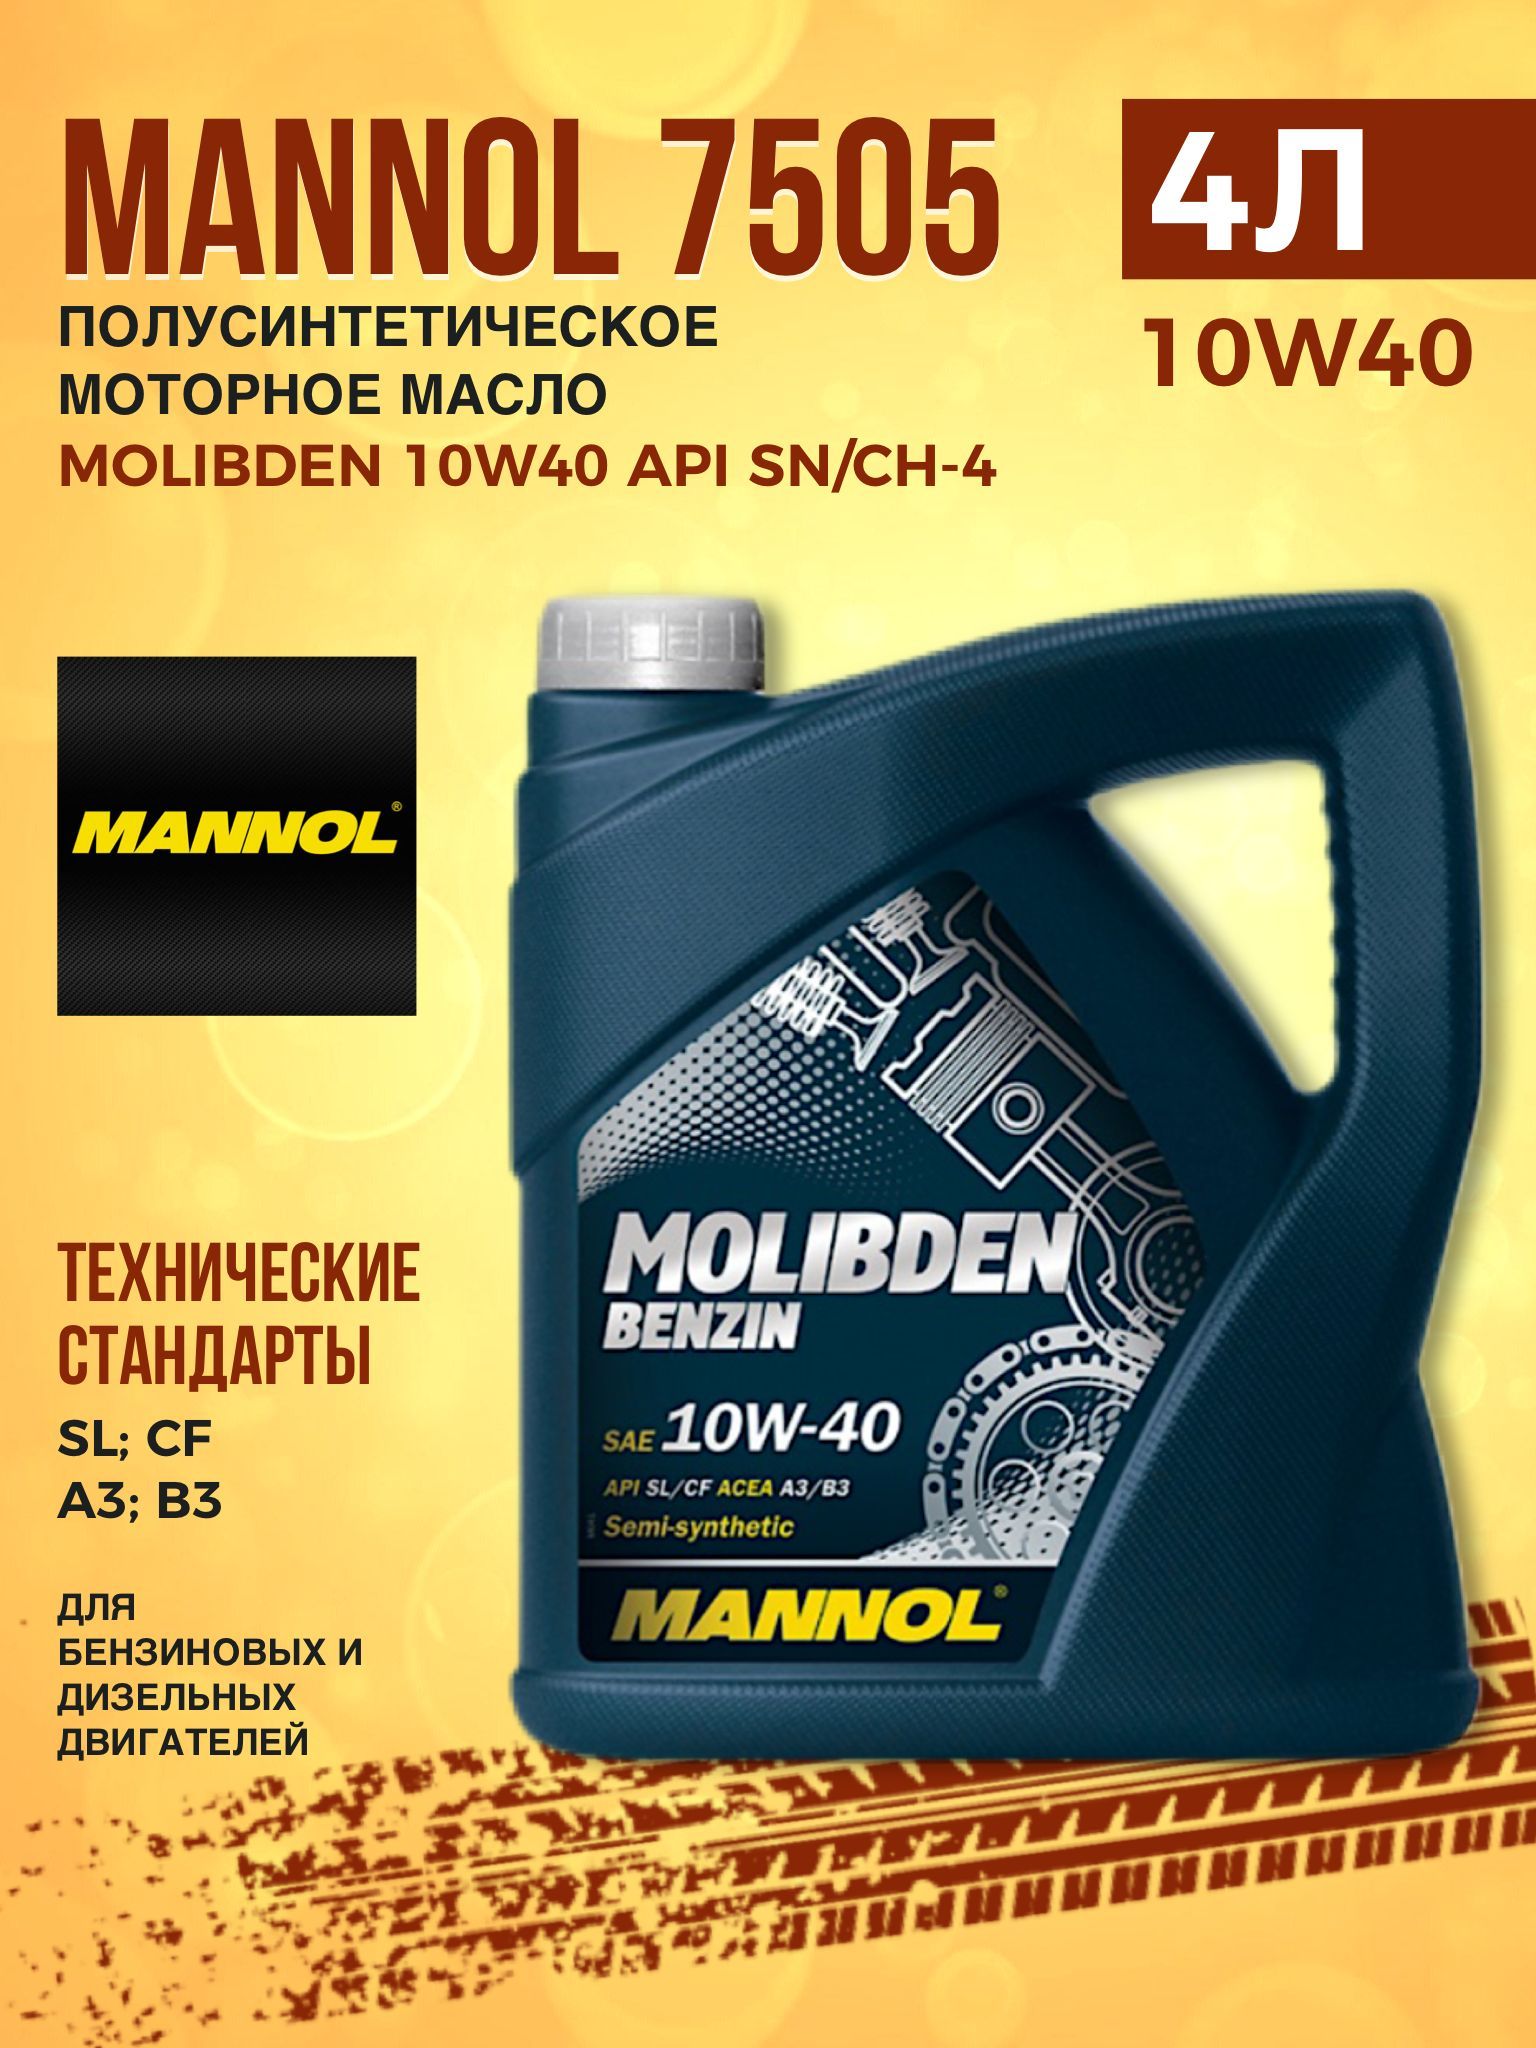 Mannol molibden 10w 40. Масло моторное 10w40 п/синт. Molibden API SN/Ch-4 (4л) (Mannol). Маннол молибден 10-40. Манол молибден 10w 40. Манол 7505.